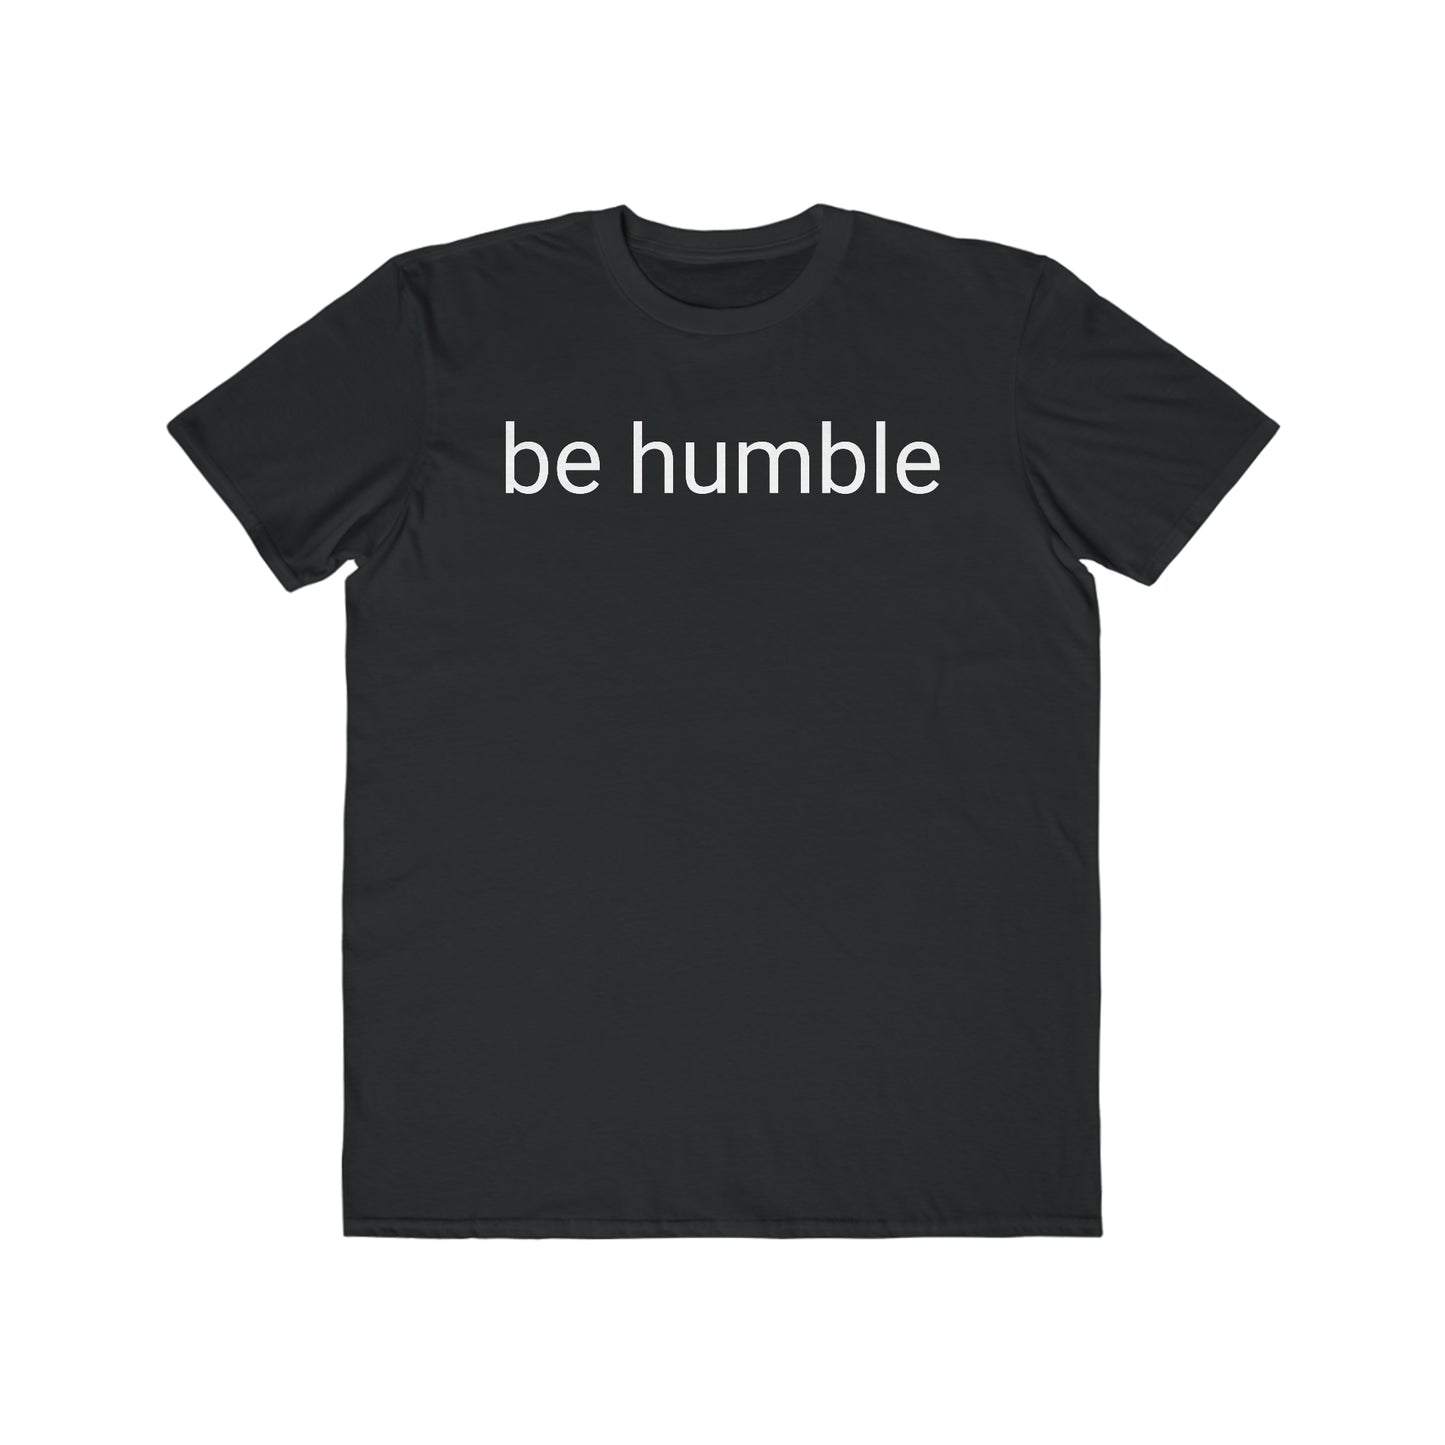 Be Humble - Men's Lightweight Fashion Tee